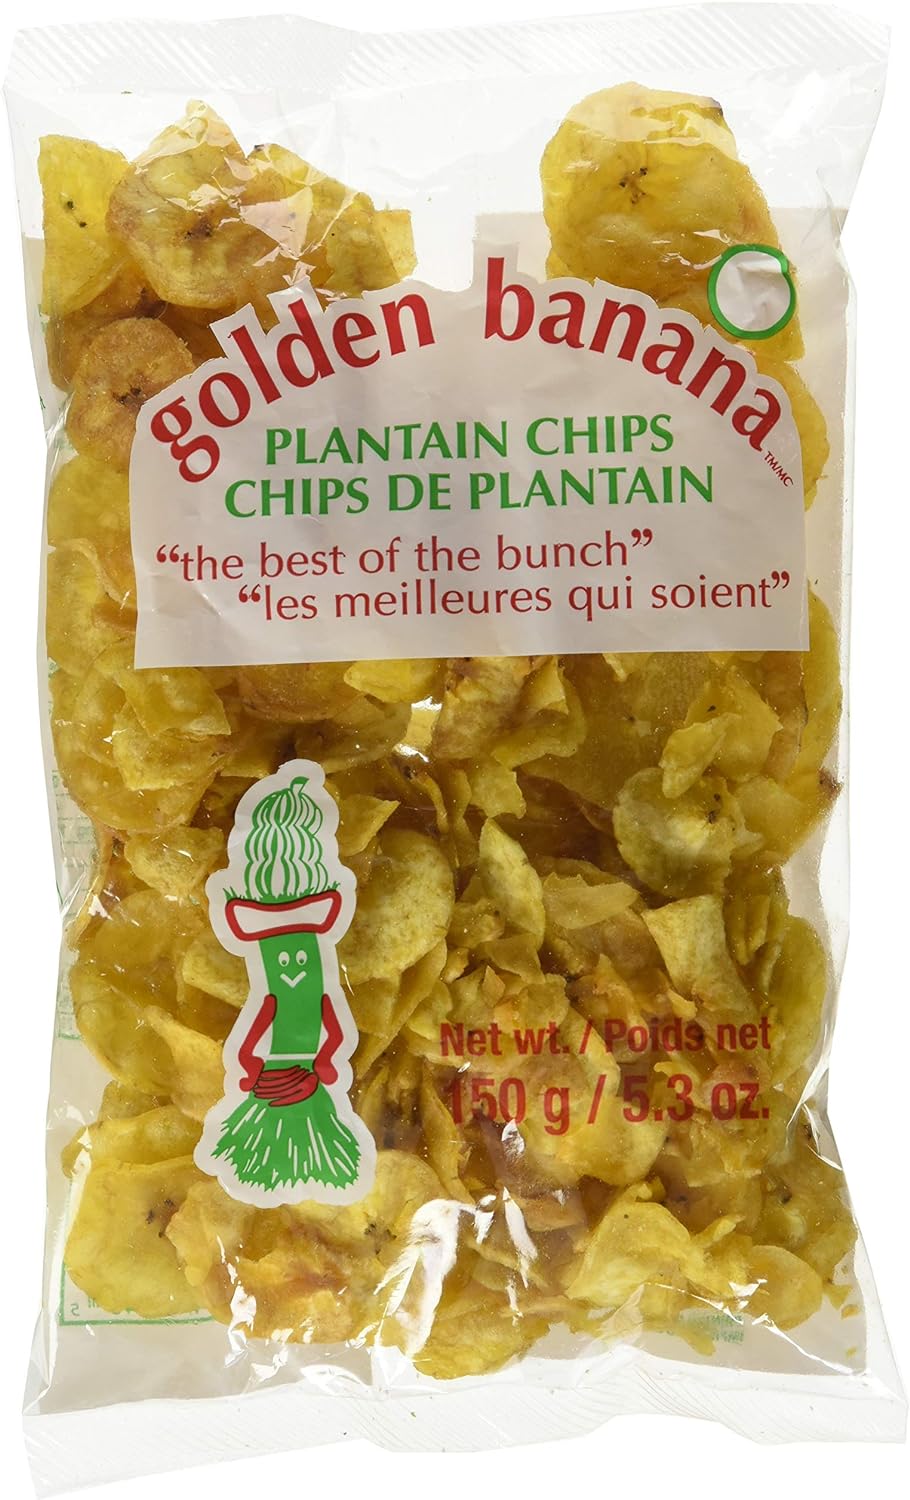 Golden Banana Plantain Chips